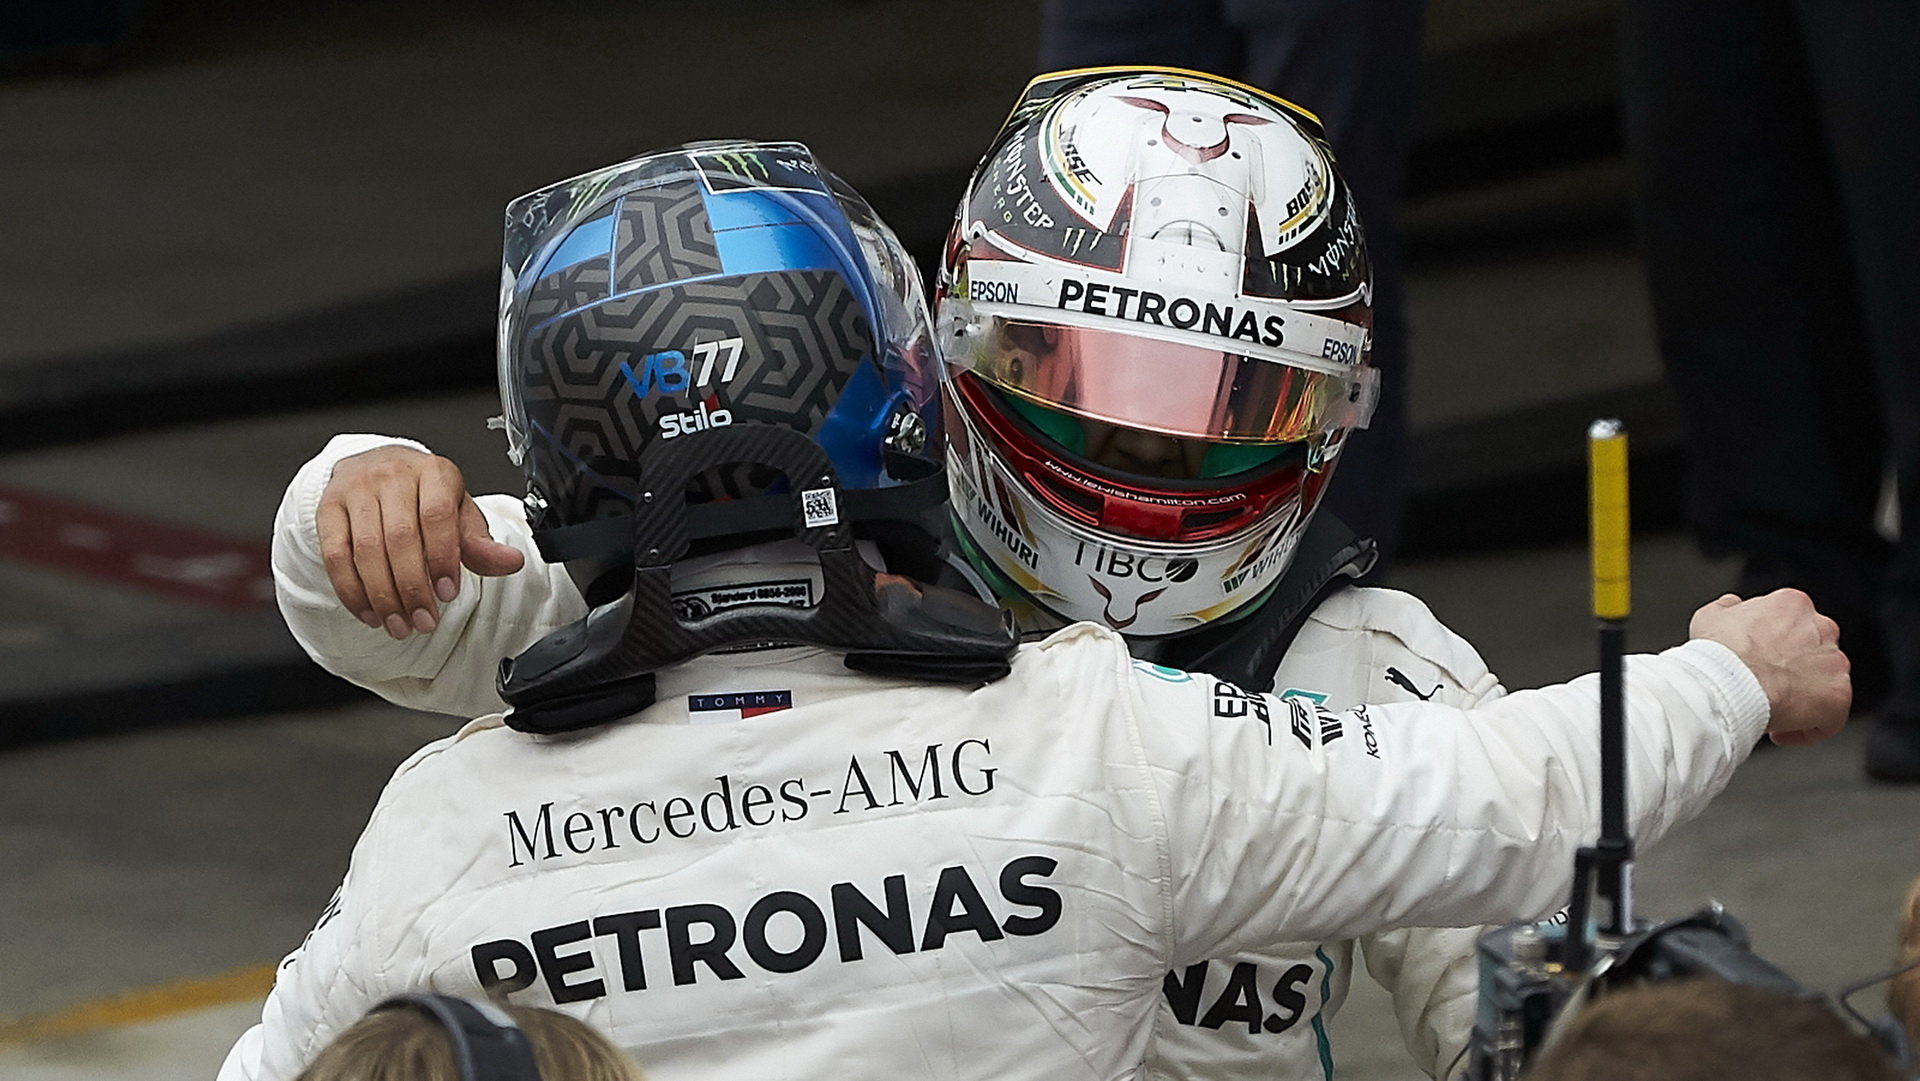 Lewis Hamilton a Valtteri Bottas po závodě v Brazílii